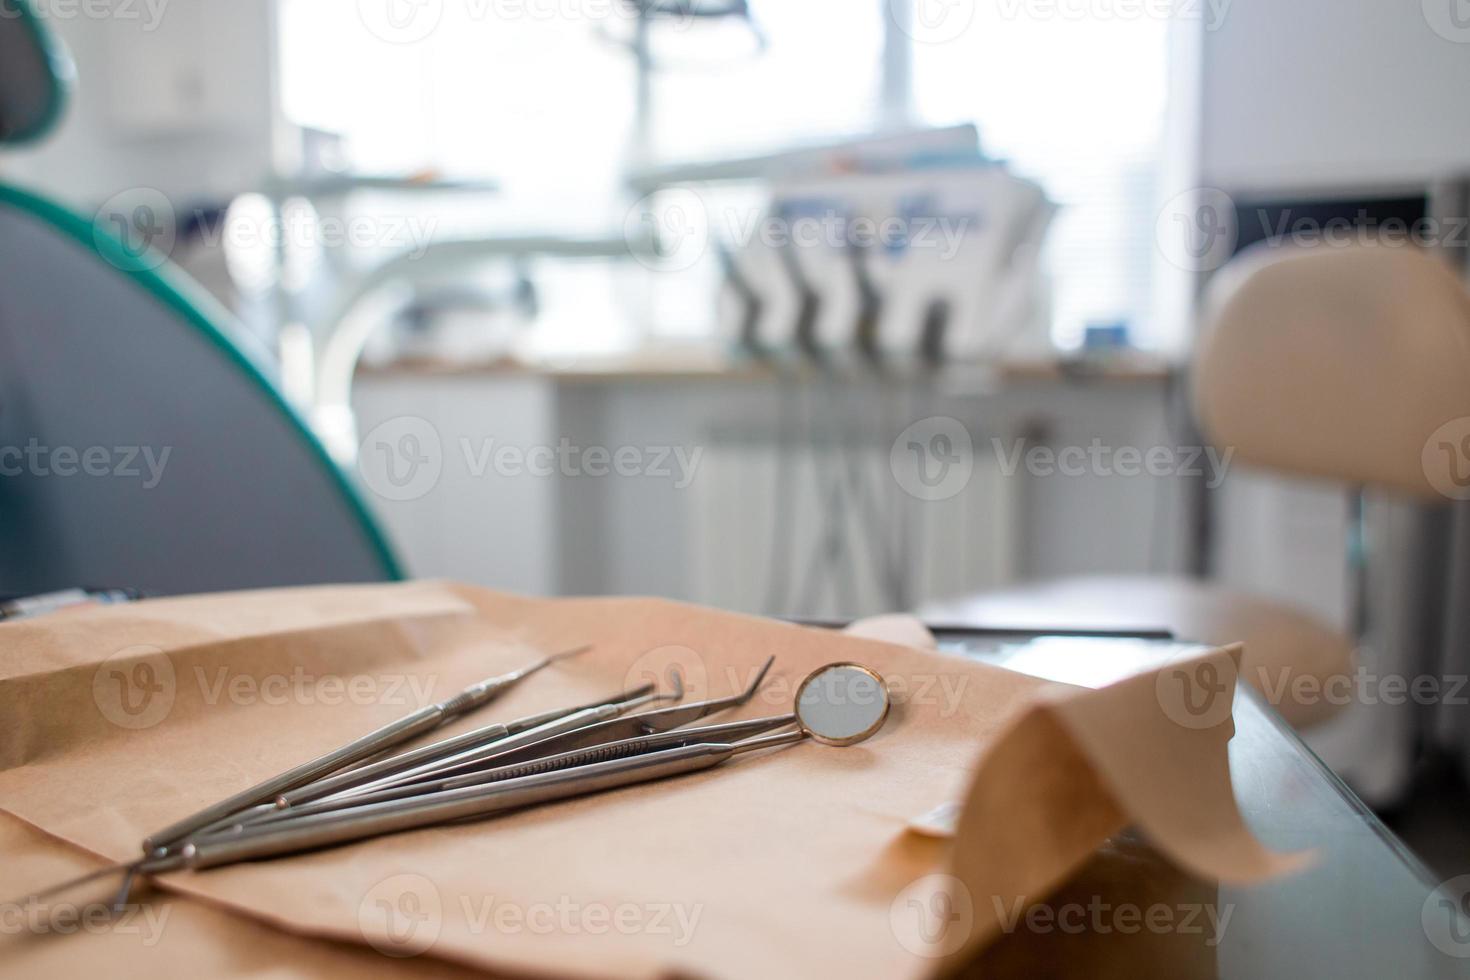 tandheelkundige instrumenten. controle en tandheelkundige behandeling in een tandheelkundige kliniek. foto